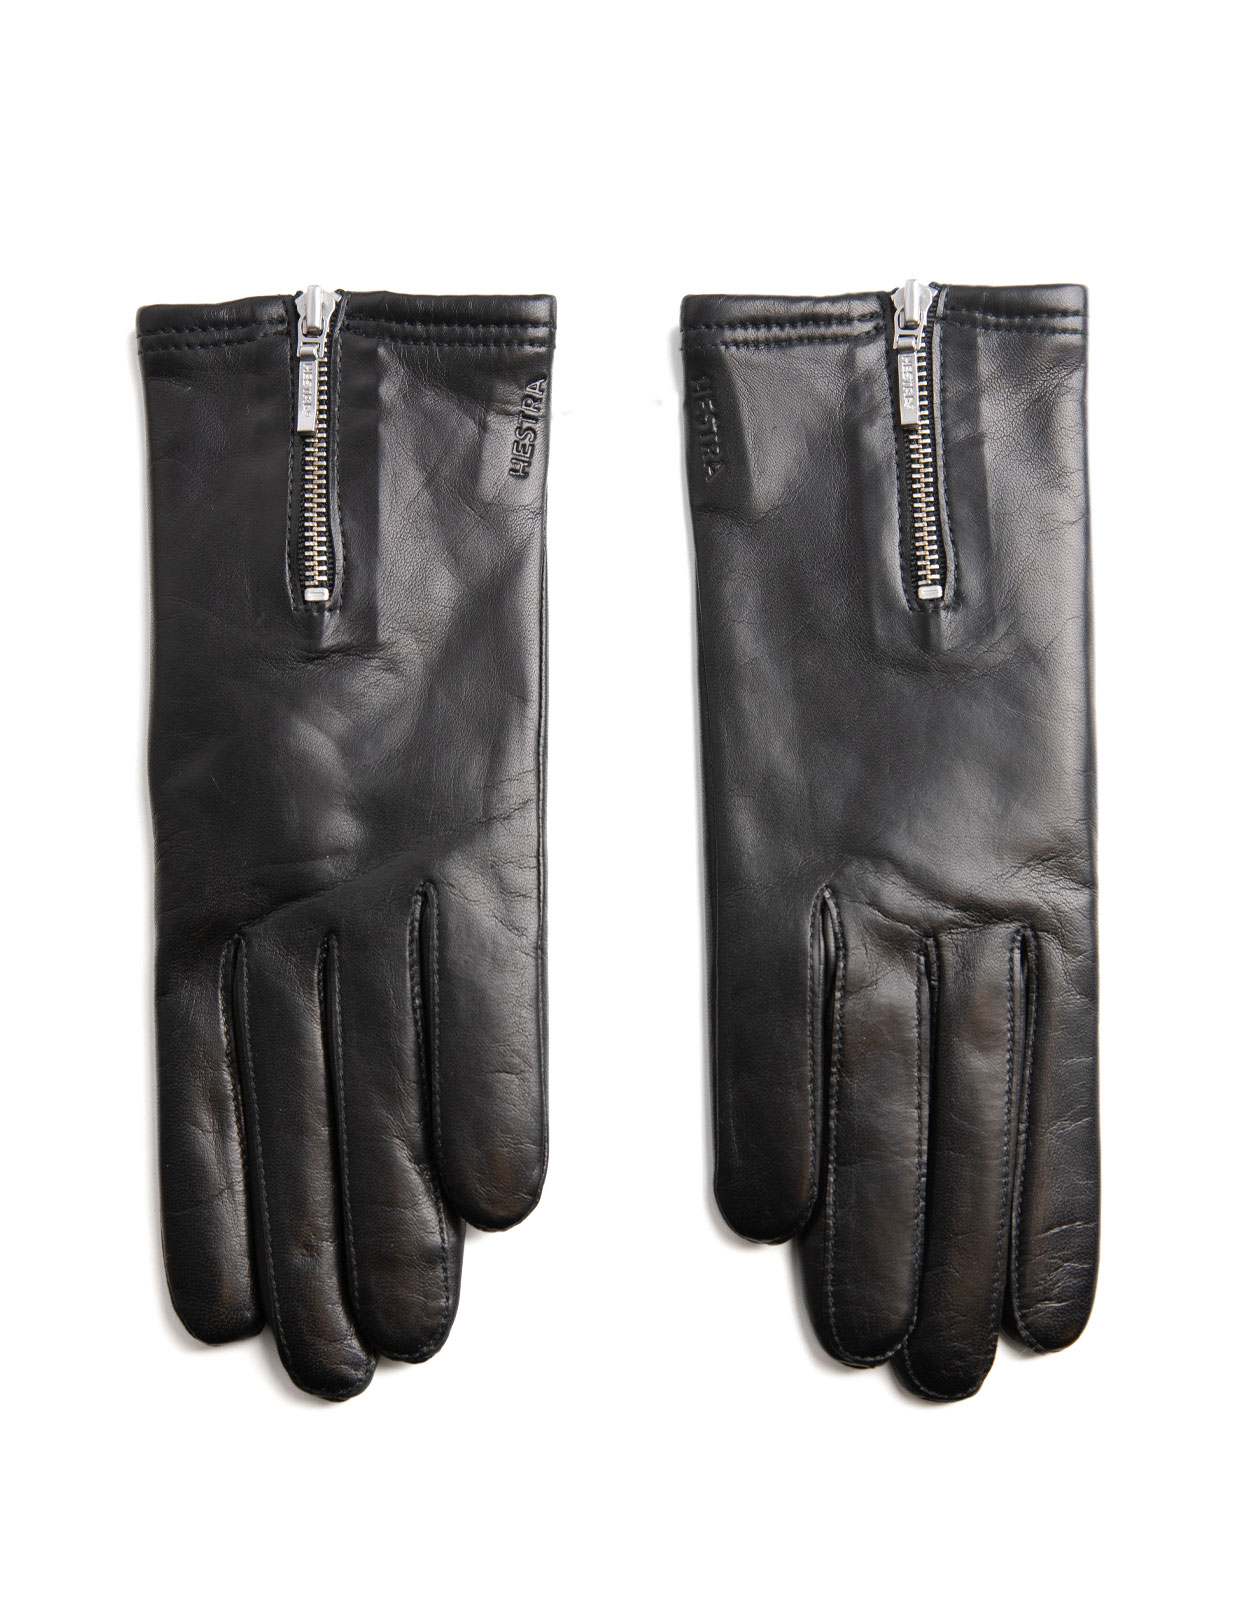 Yvette Zip Glove Black